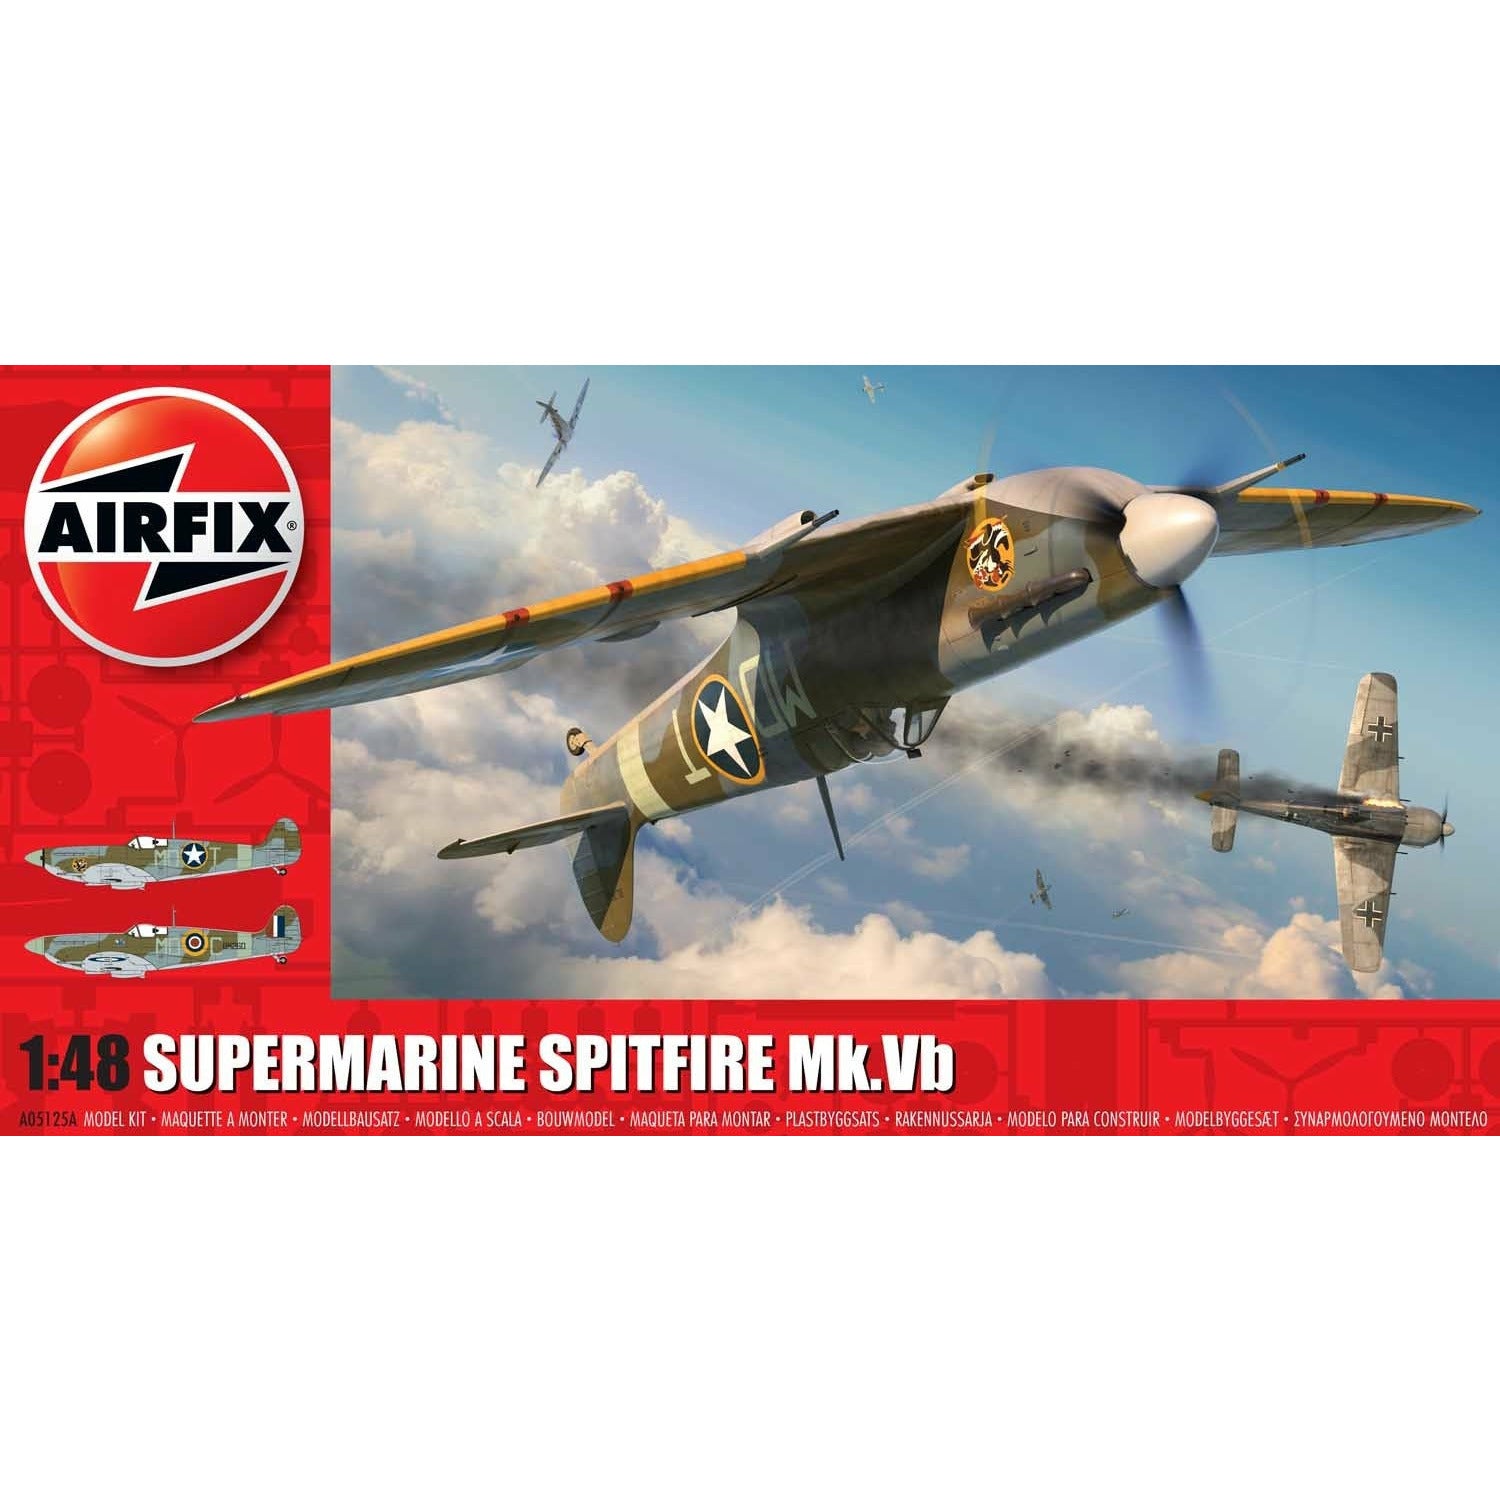 Supermarine Spitfire Mk.vb 1/48 #05125A by Airfix